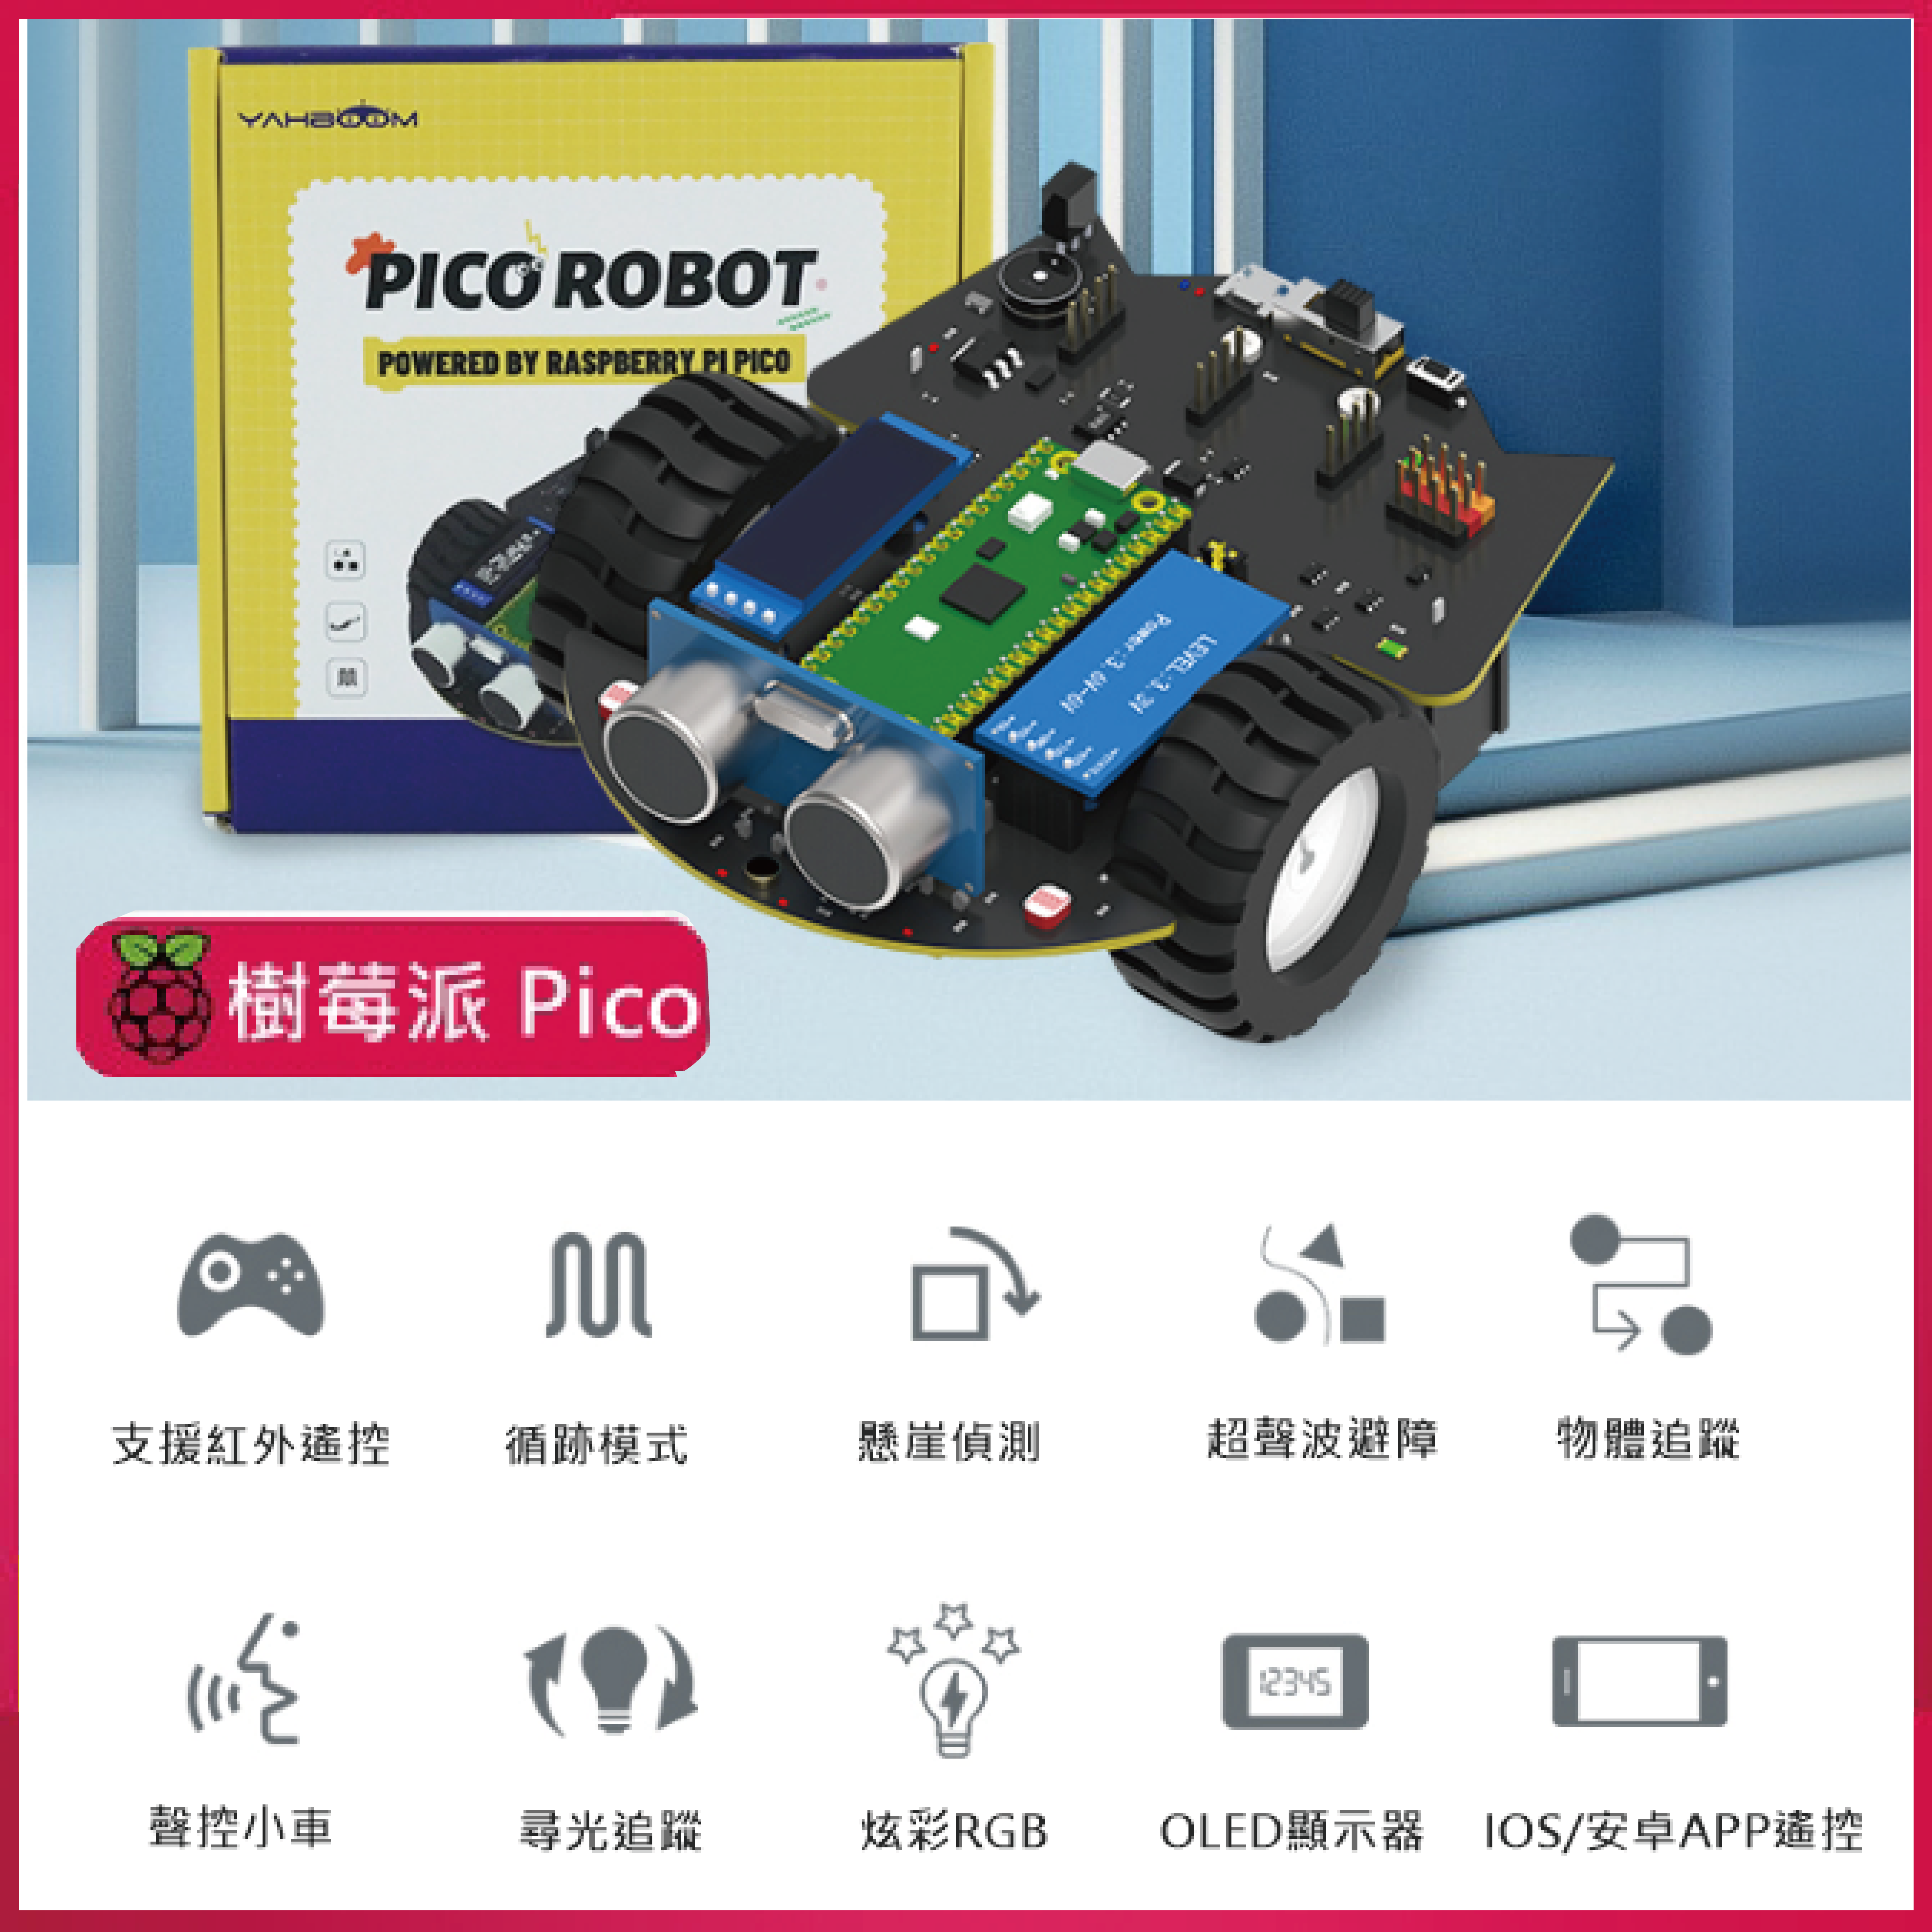 【YAB008】亞博yahboom 樹莓派 Pico Robot 智能小車